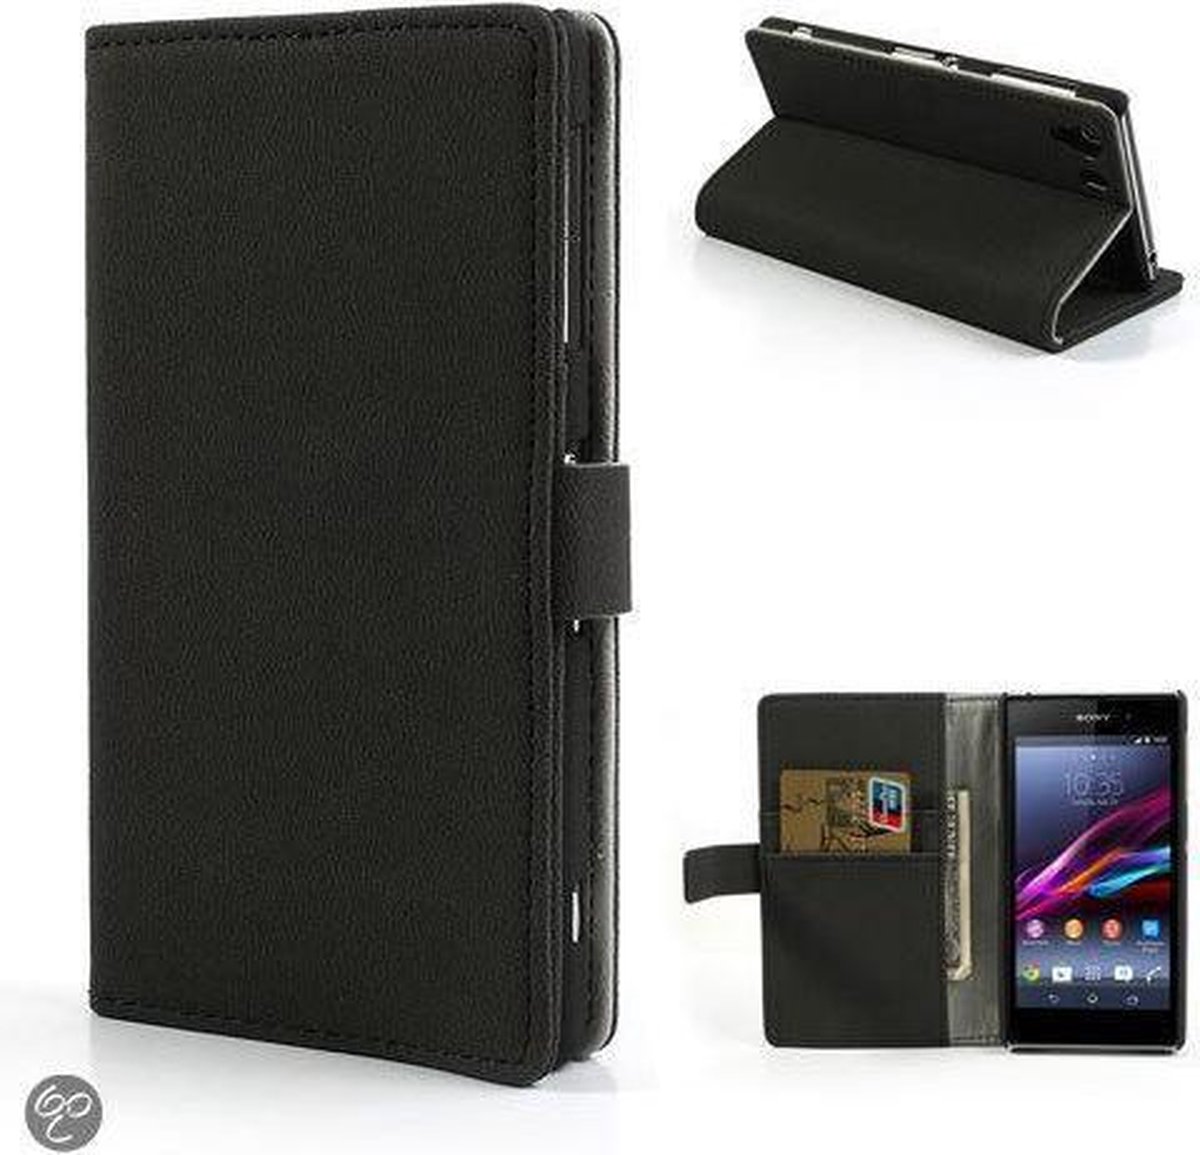 ontwikkeling Petulance servet Gravel Wallet case hoesje Sony Xperia Z1 zwart | bol.com